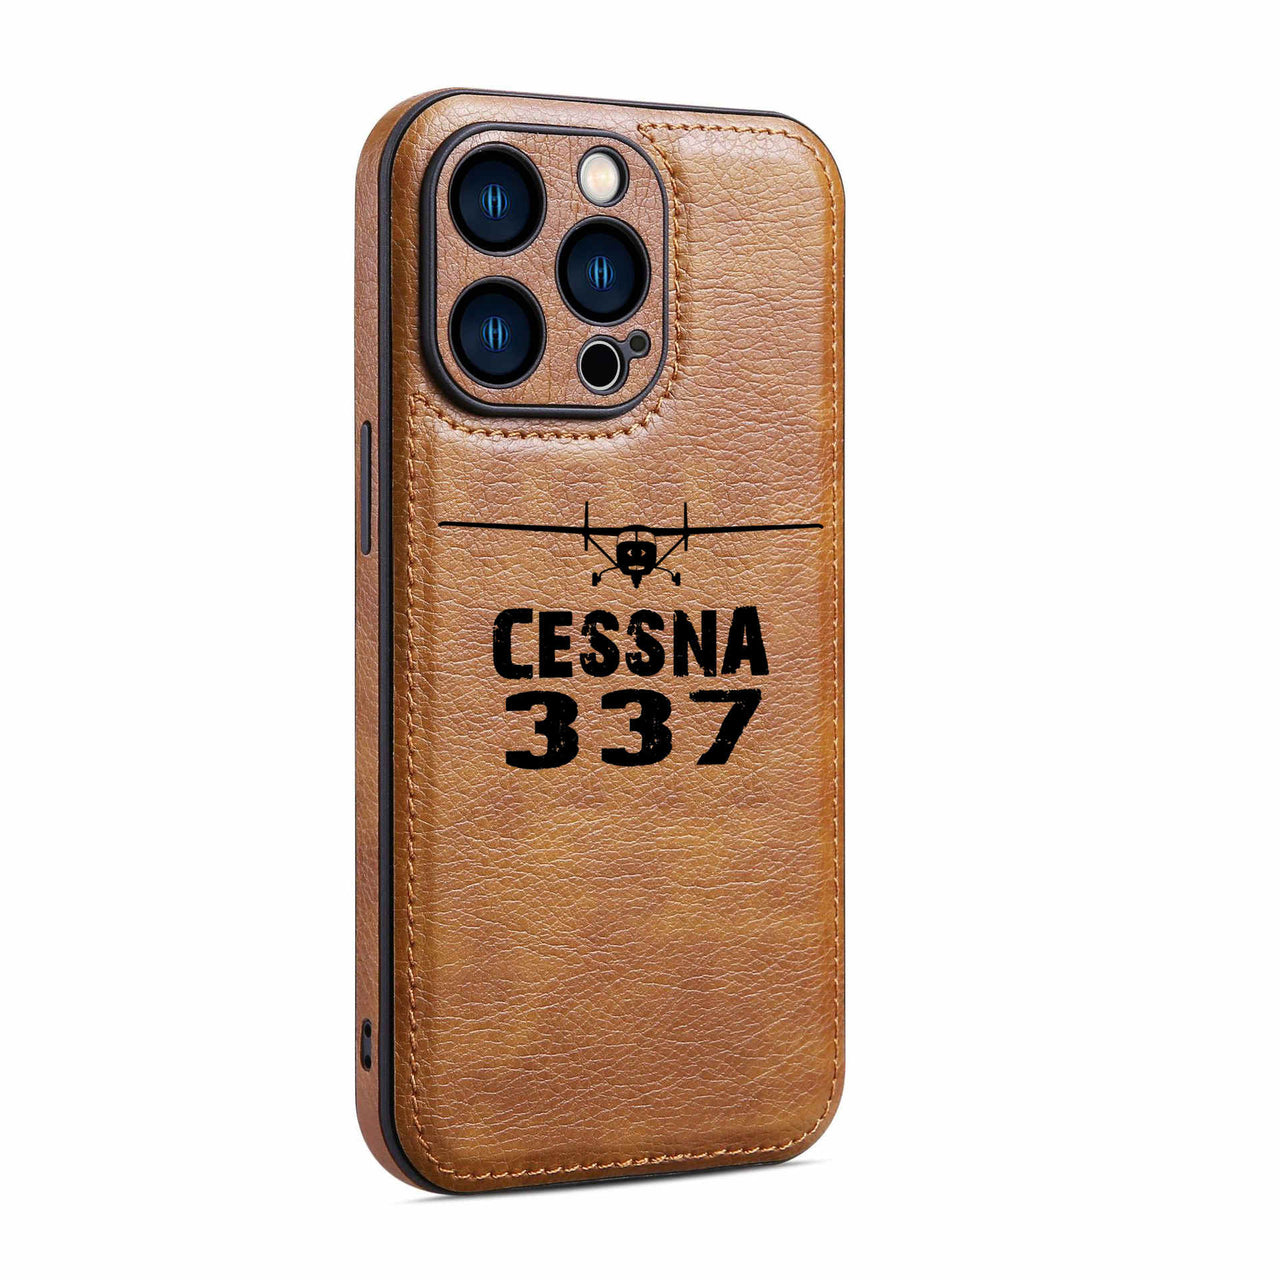 Cessna 337 & Plane Designed Leather iPhone Cases